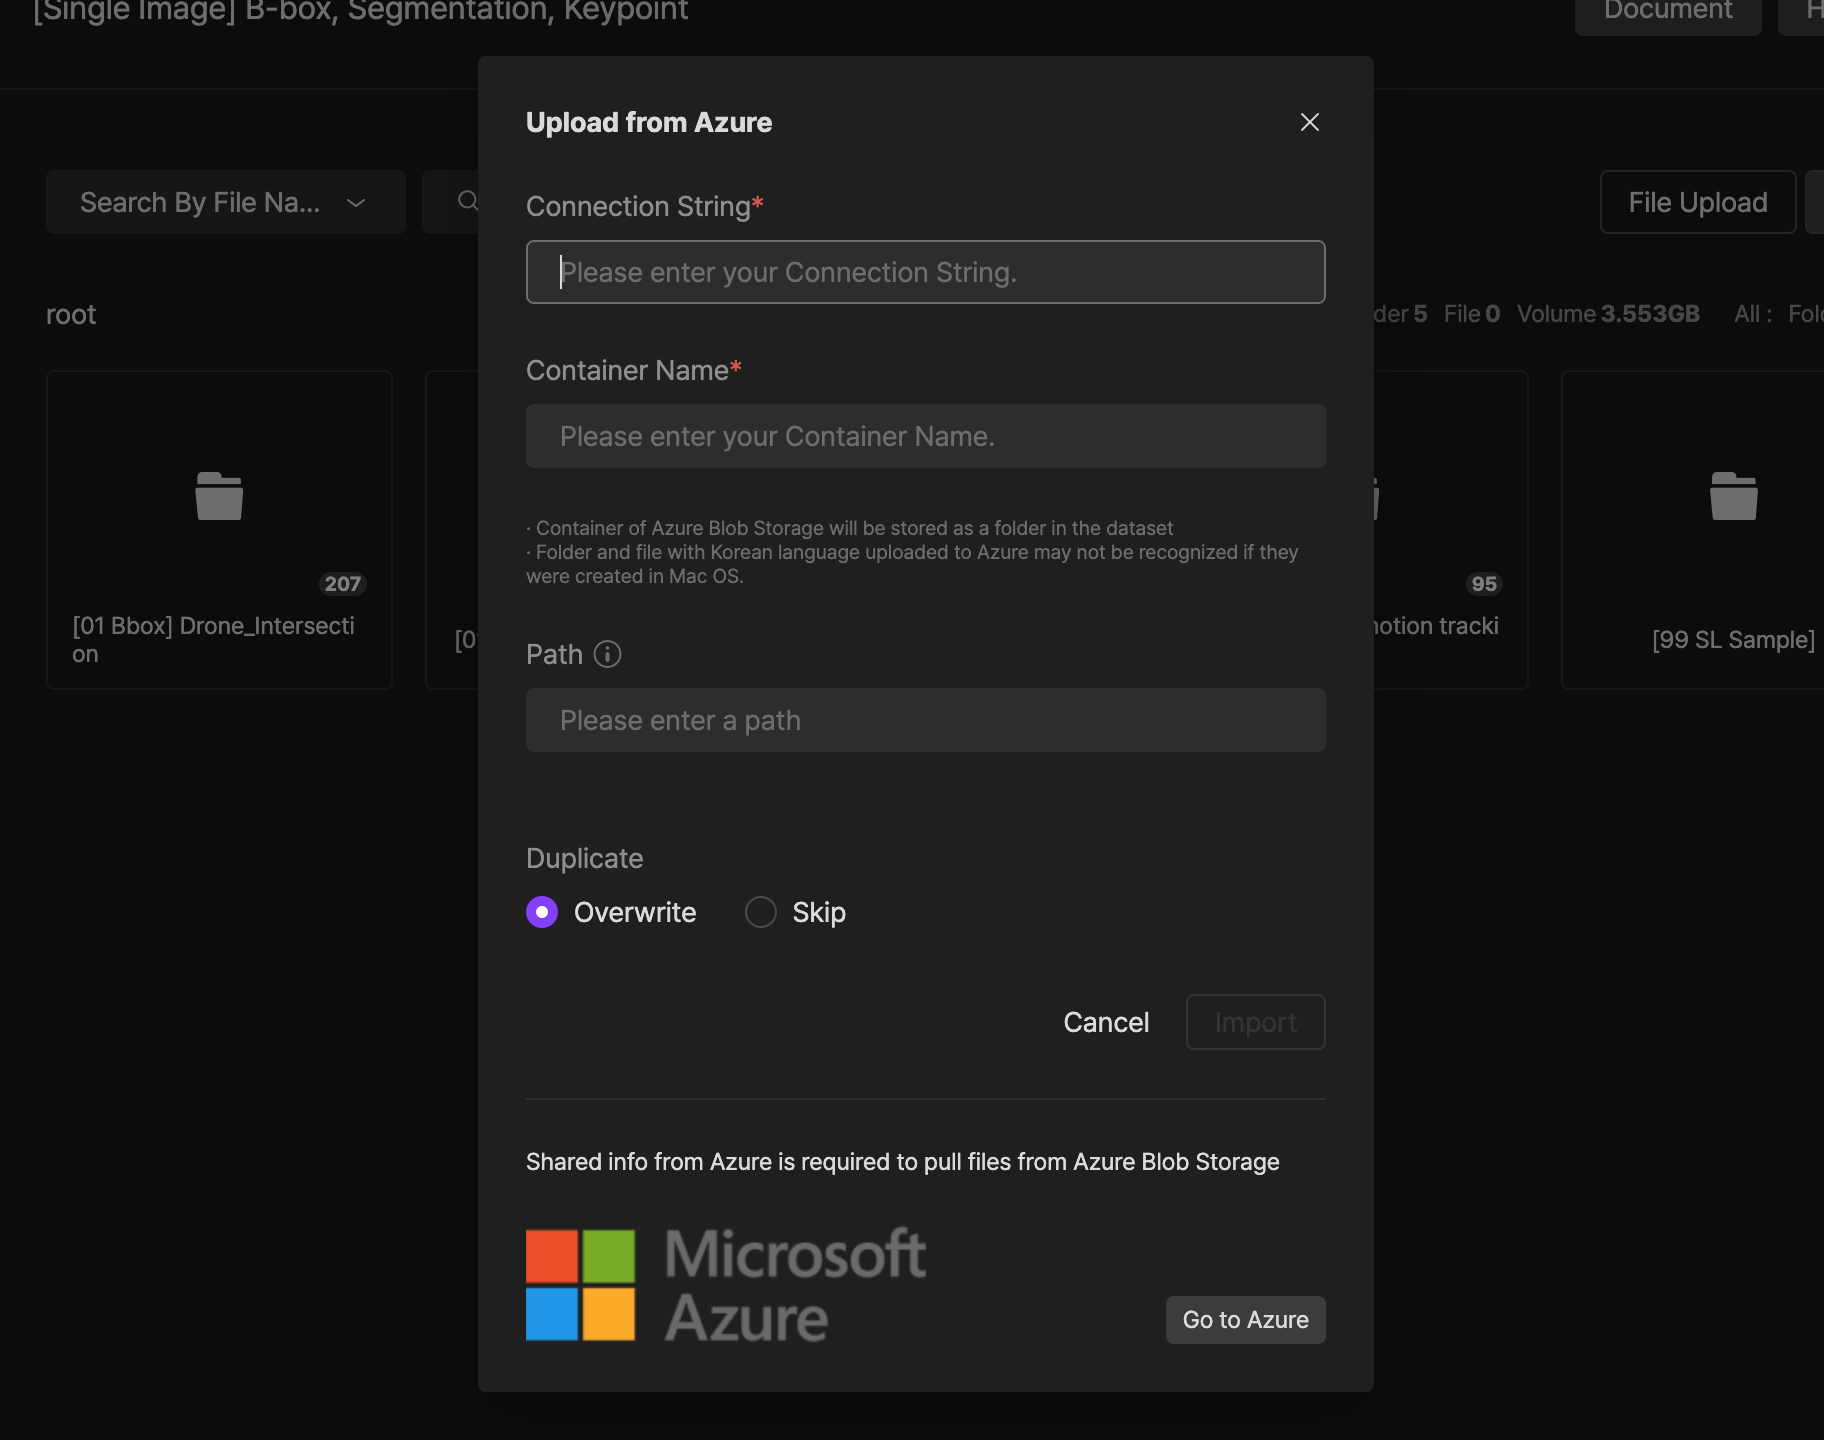 Azure upload settings screen